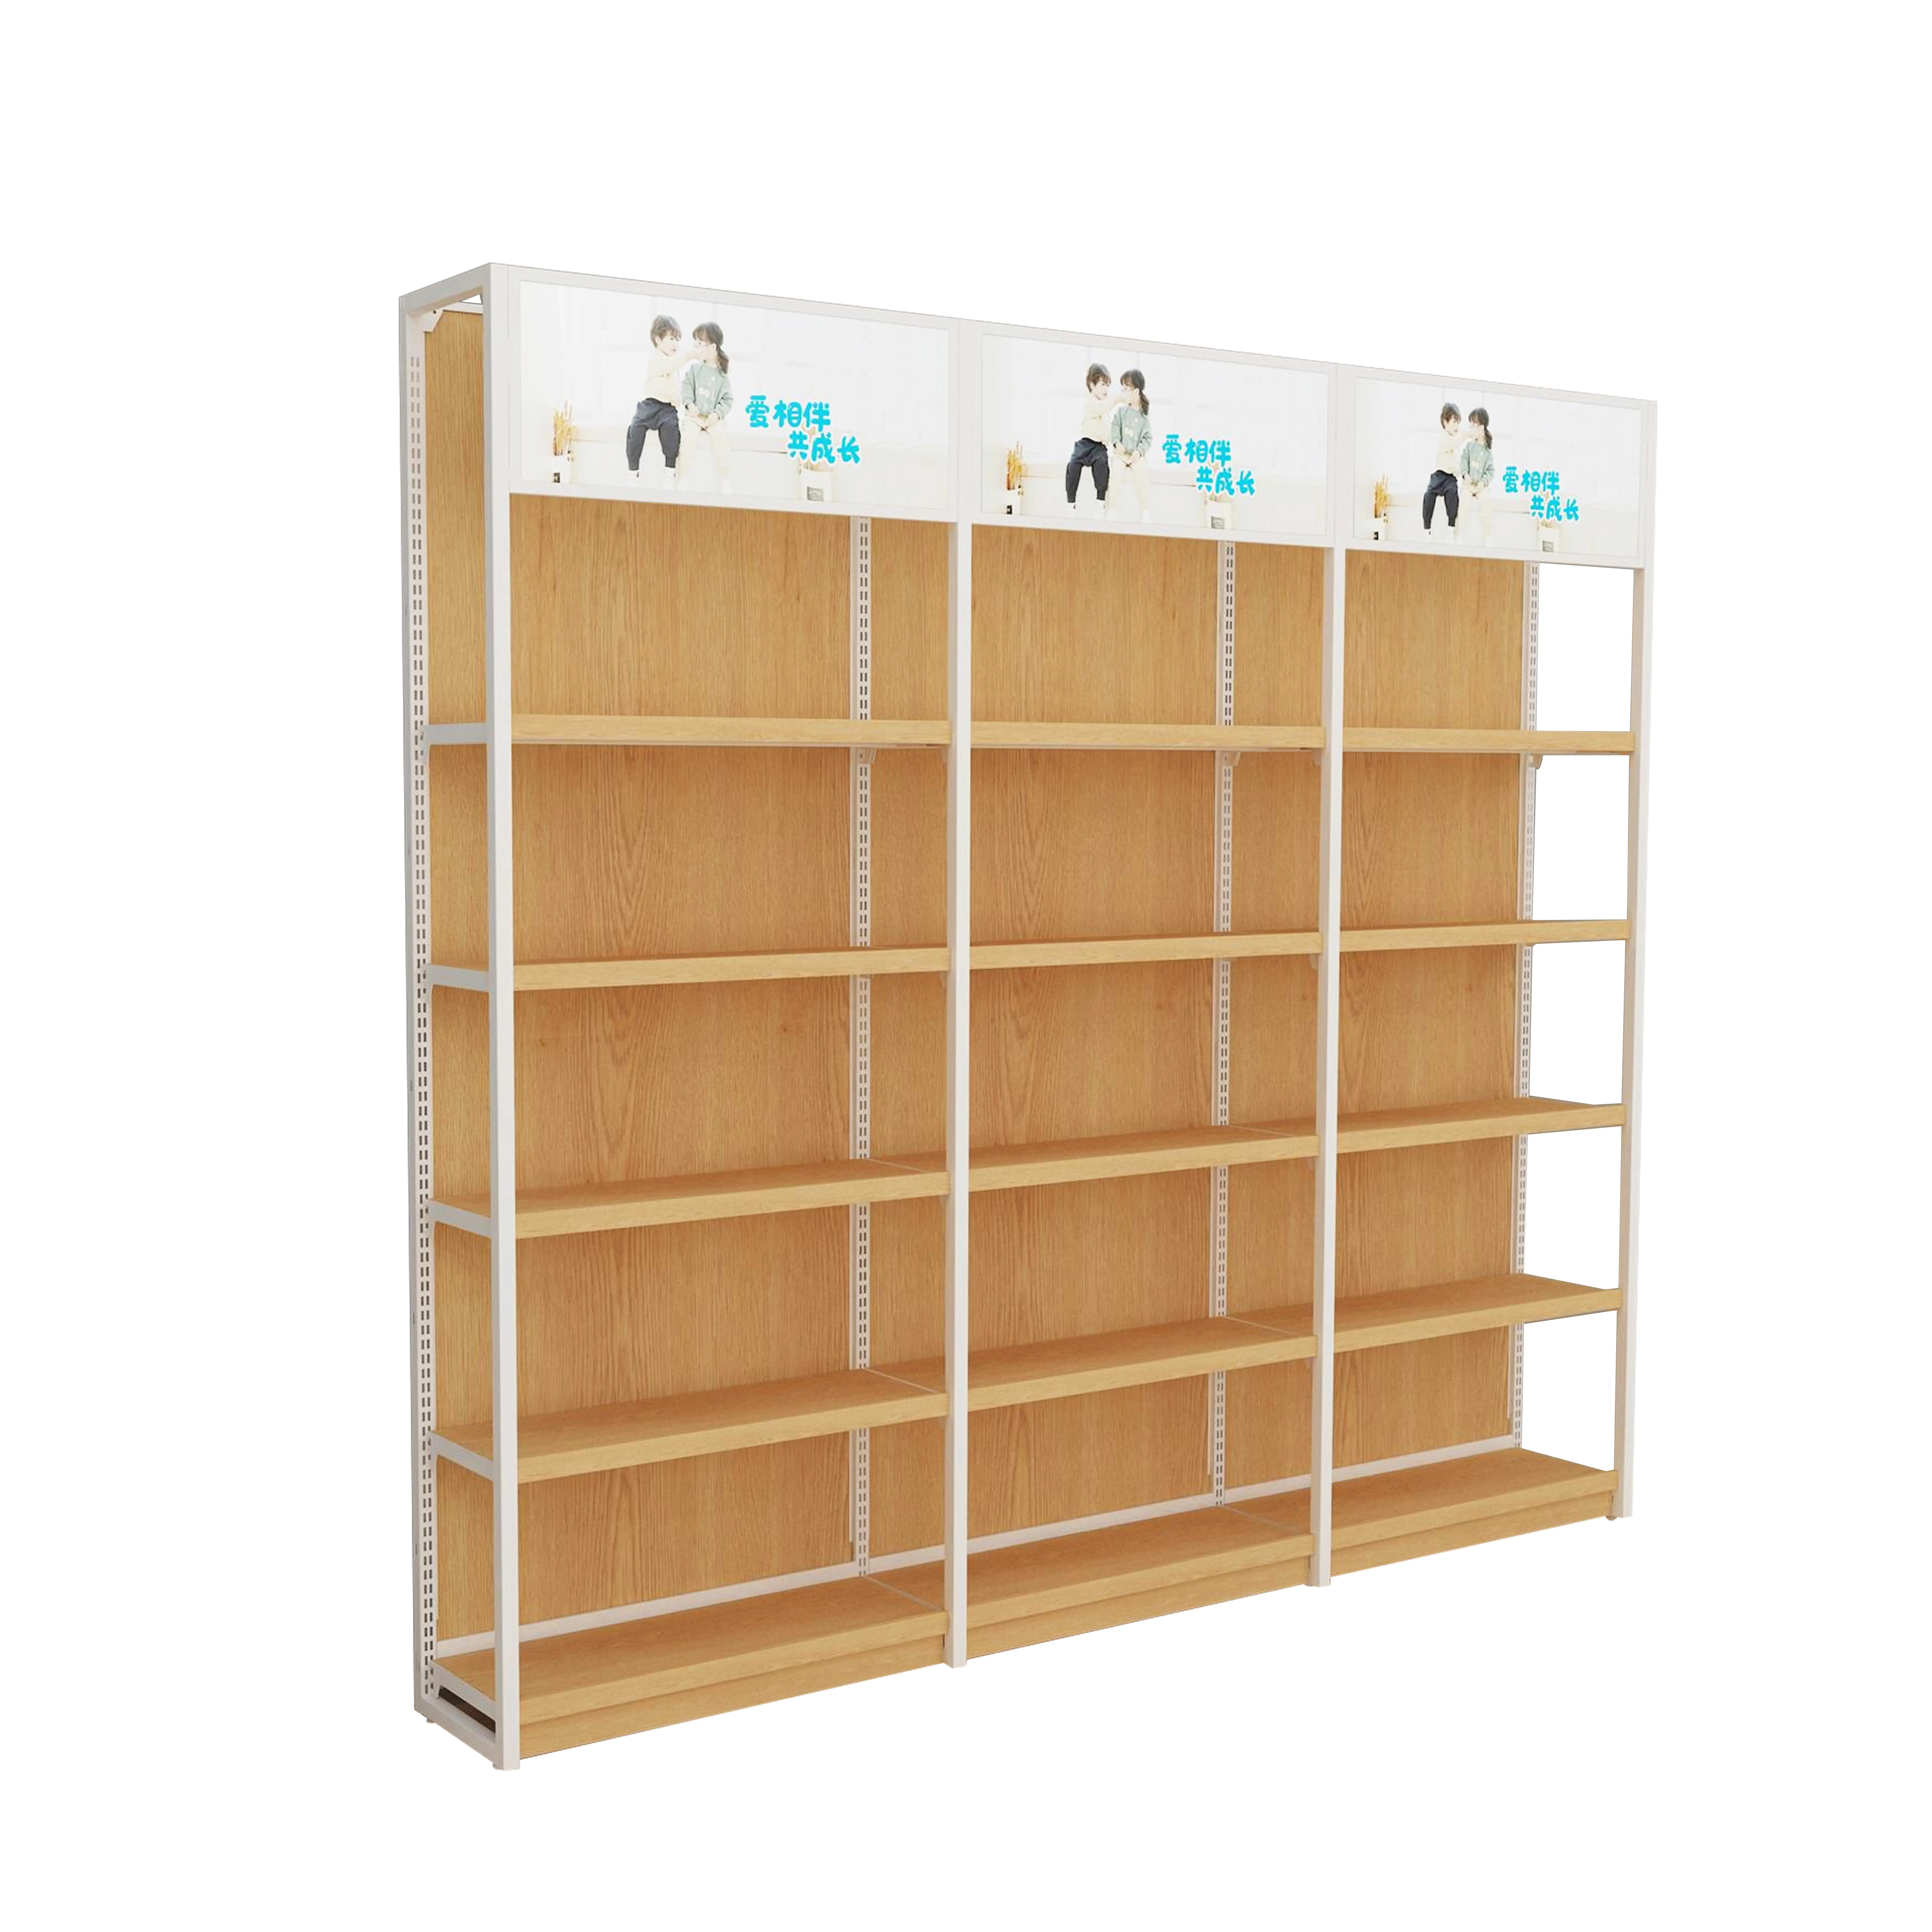 Economical supermarket wooden shelves display rack for store,grocery